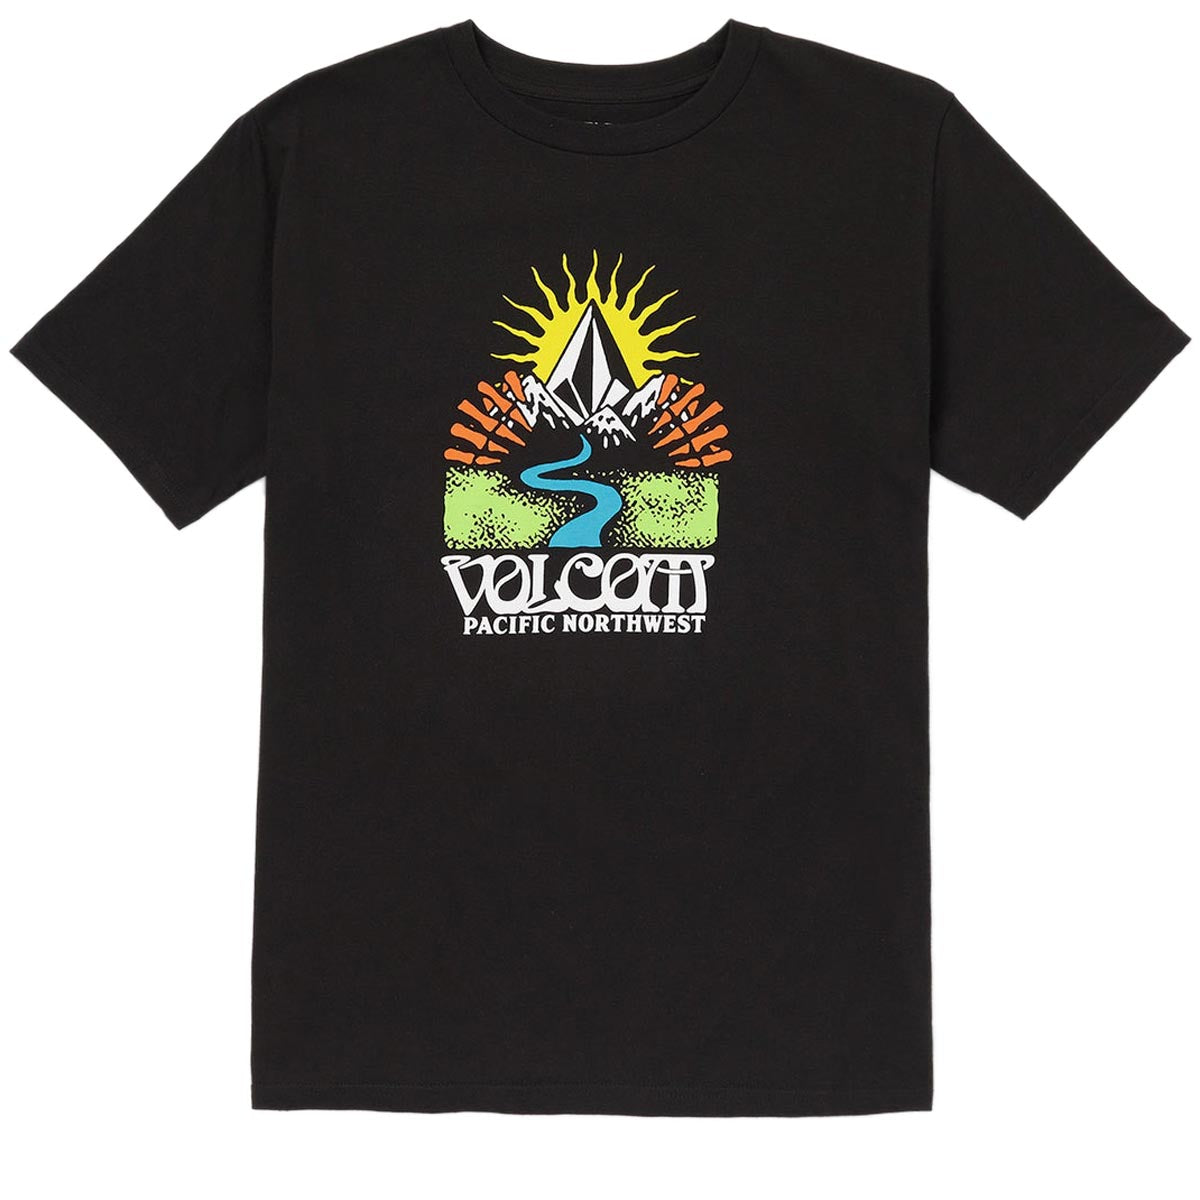 Volcom PNW T-Shirt - Black image 1